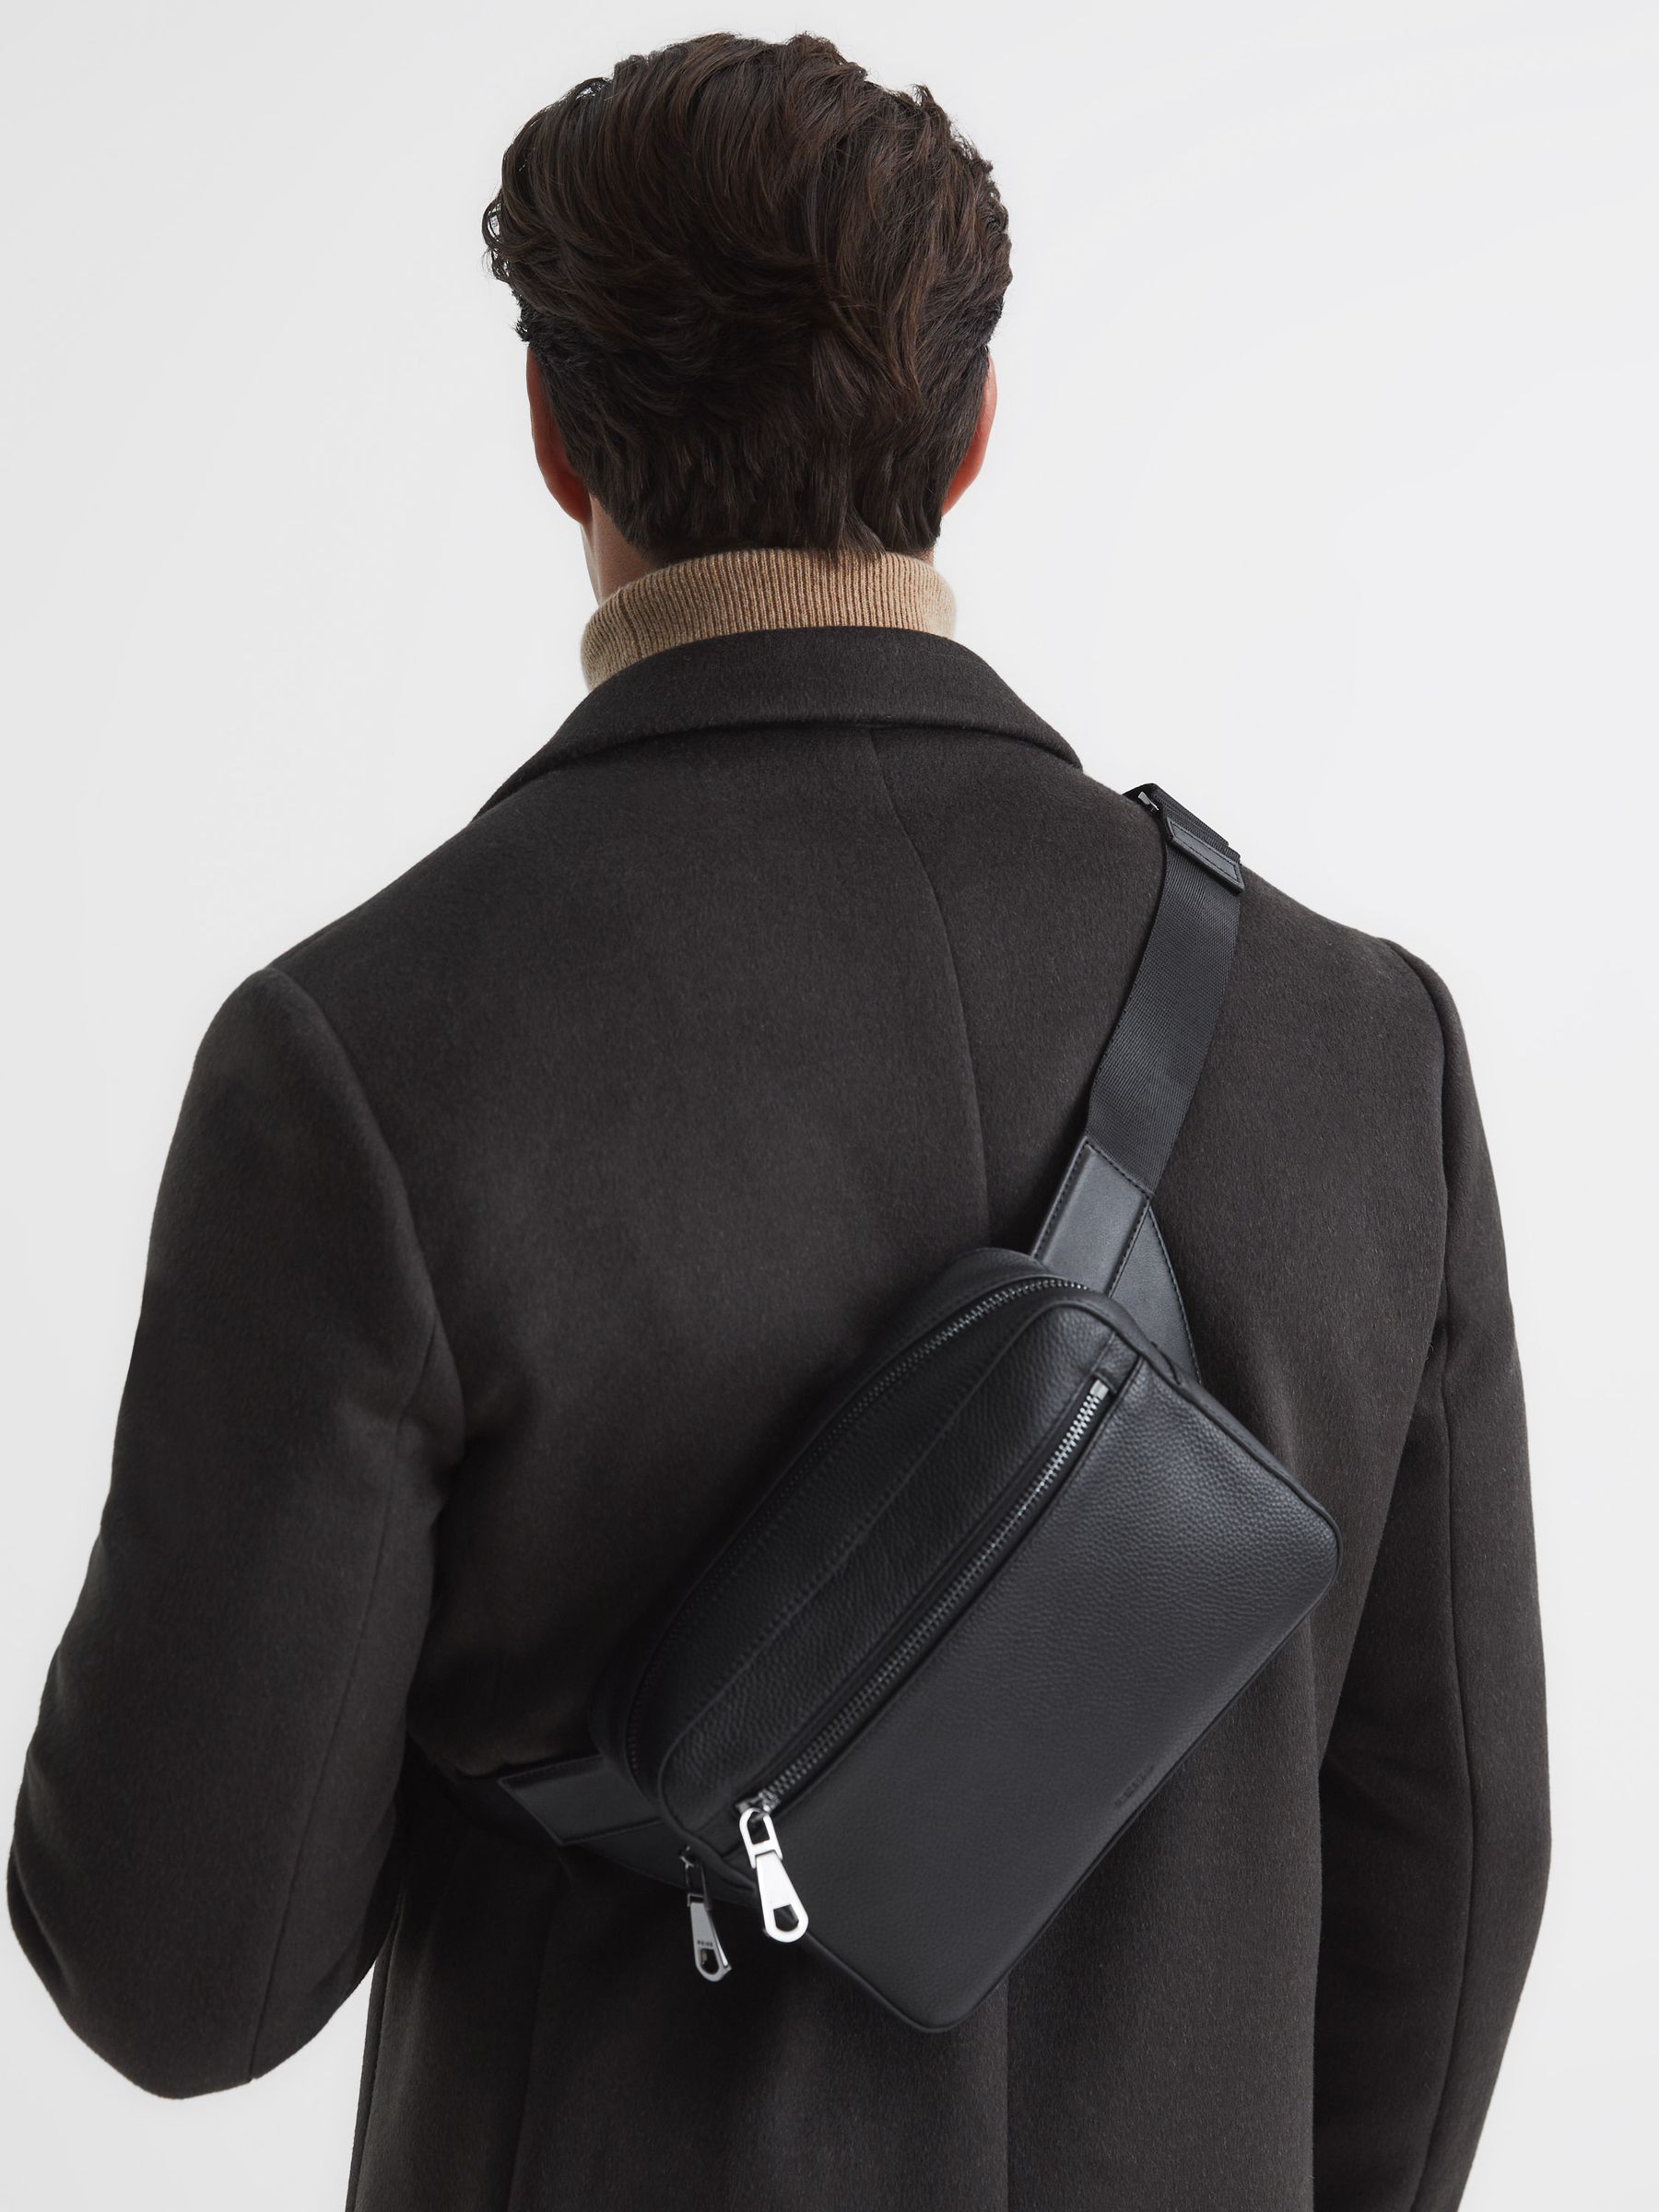 Reiss Carter Leather Cross-Body Bag - REISS